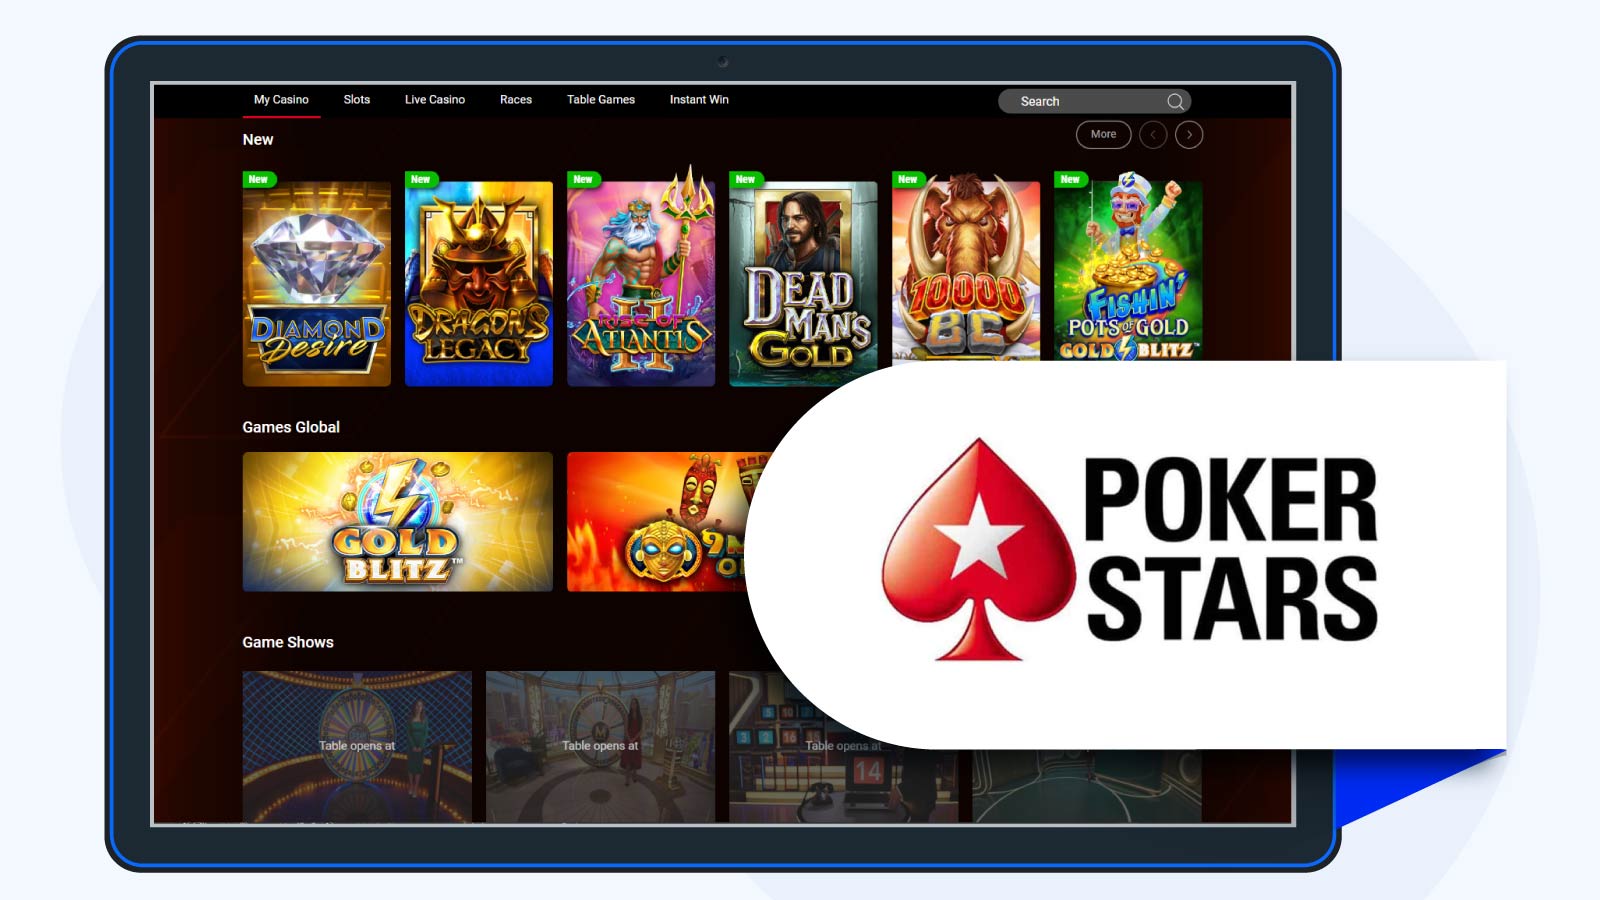 PokerStars Casino - Casino with Full-house of jackpots